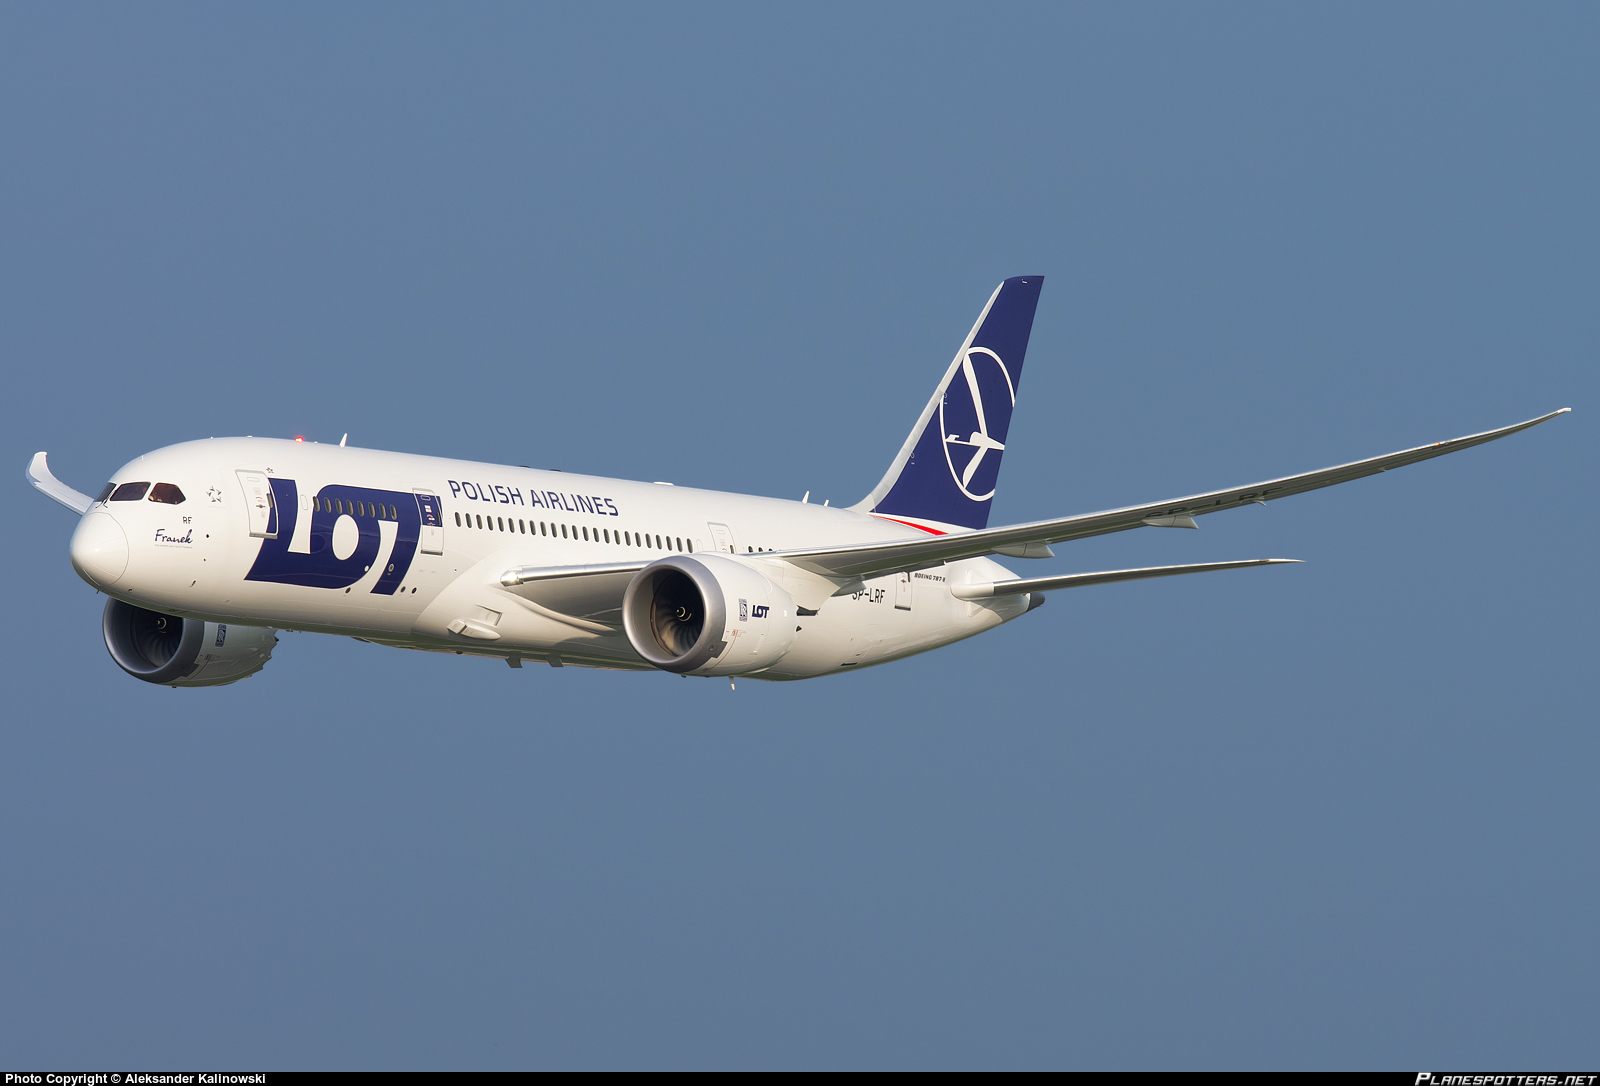 sp-lrf-lot-polish-airlines-boeing-787-8-dreamliner_PlanespottersNet_457359